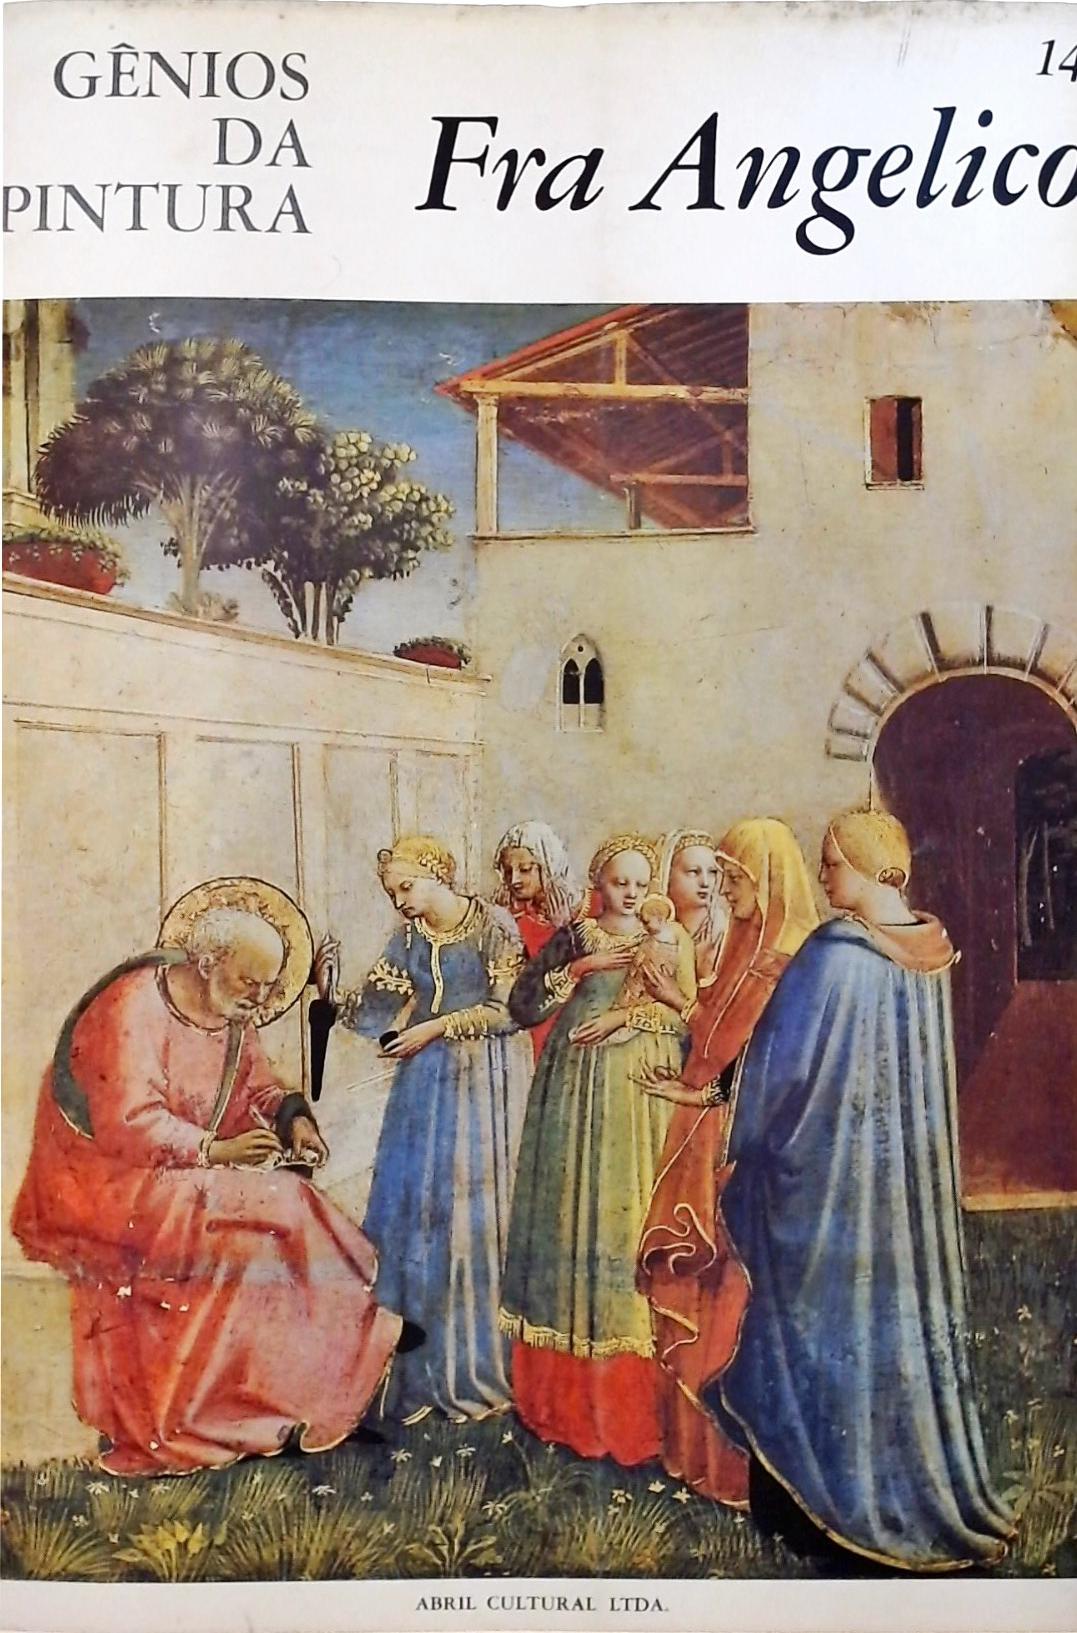 Gênios da Pintura - Fra Angelico